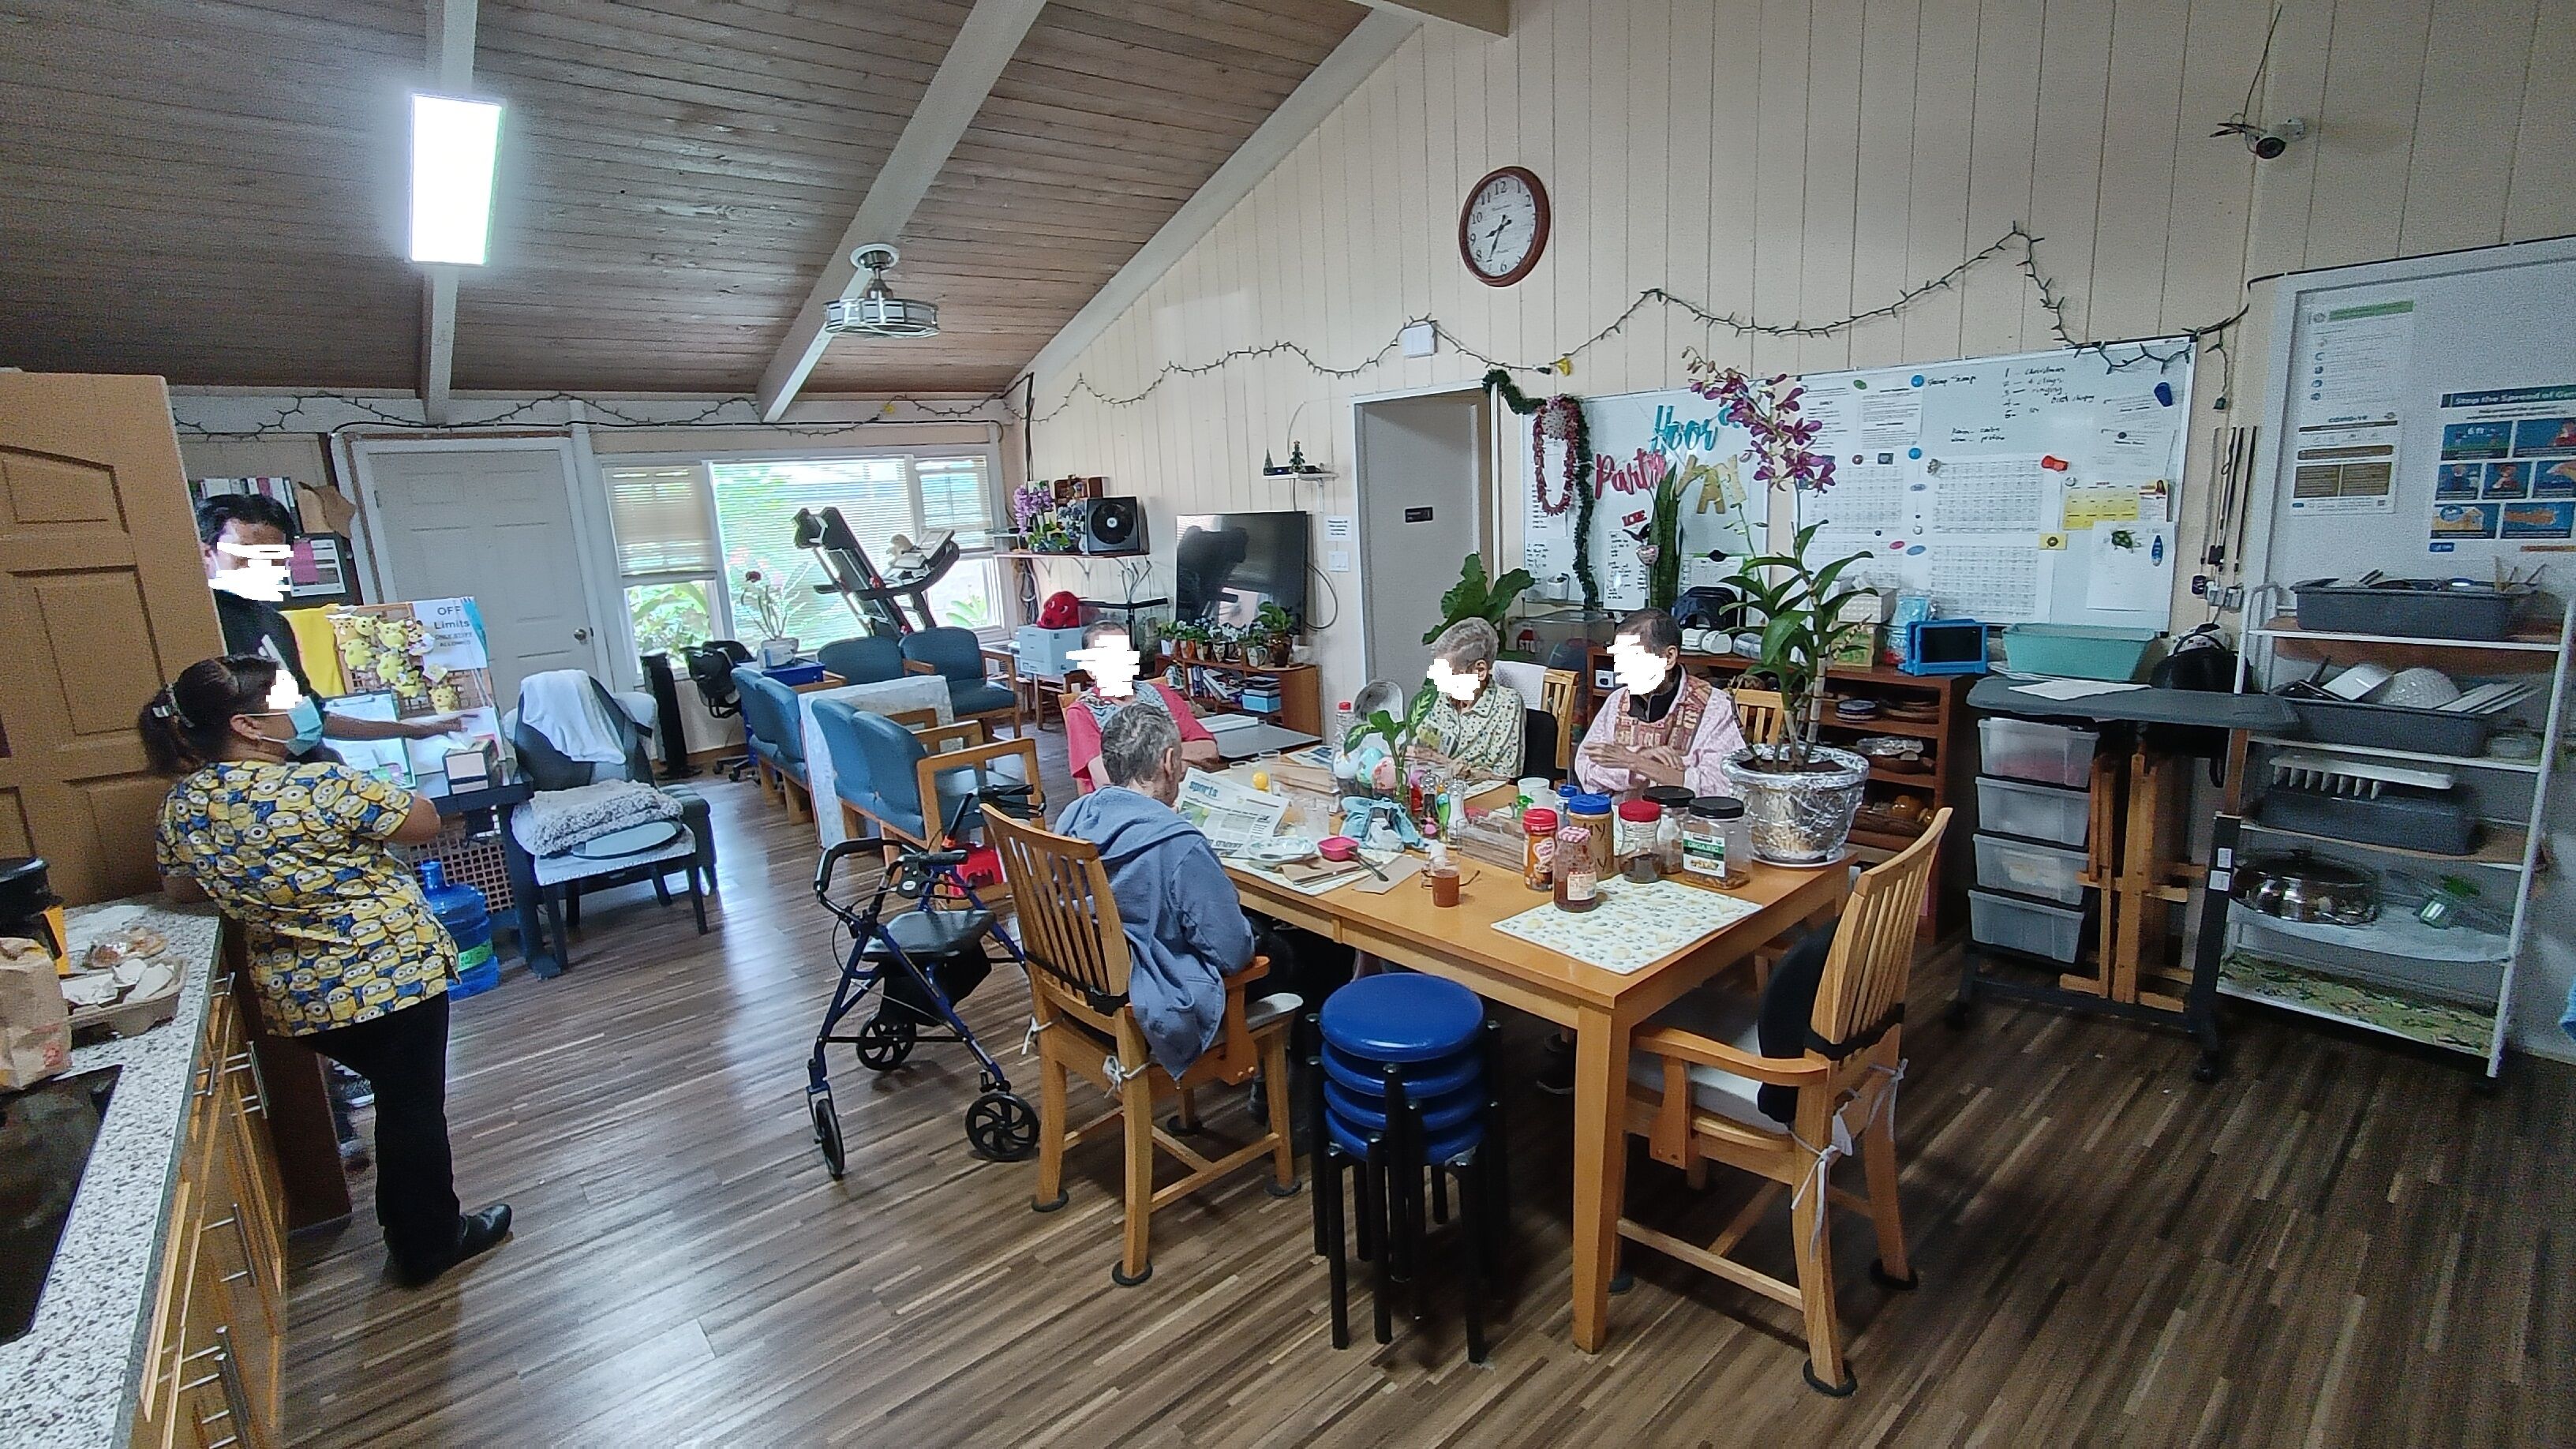 Seniors enjoying communal dining in the stylish, hardwood-floored interior of AAA Care Home.